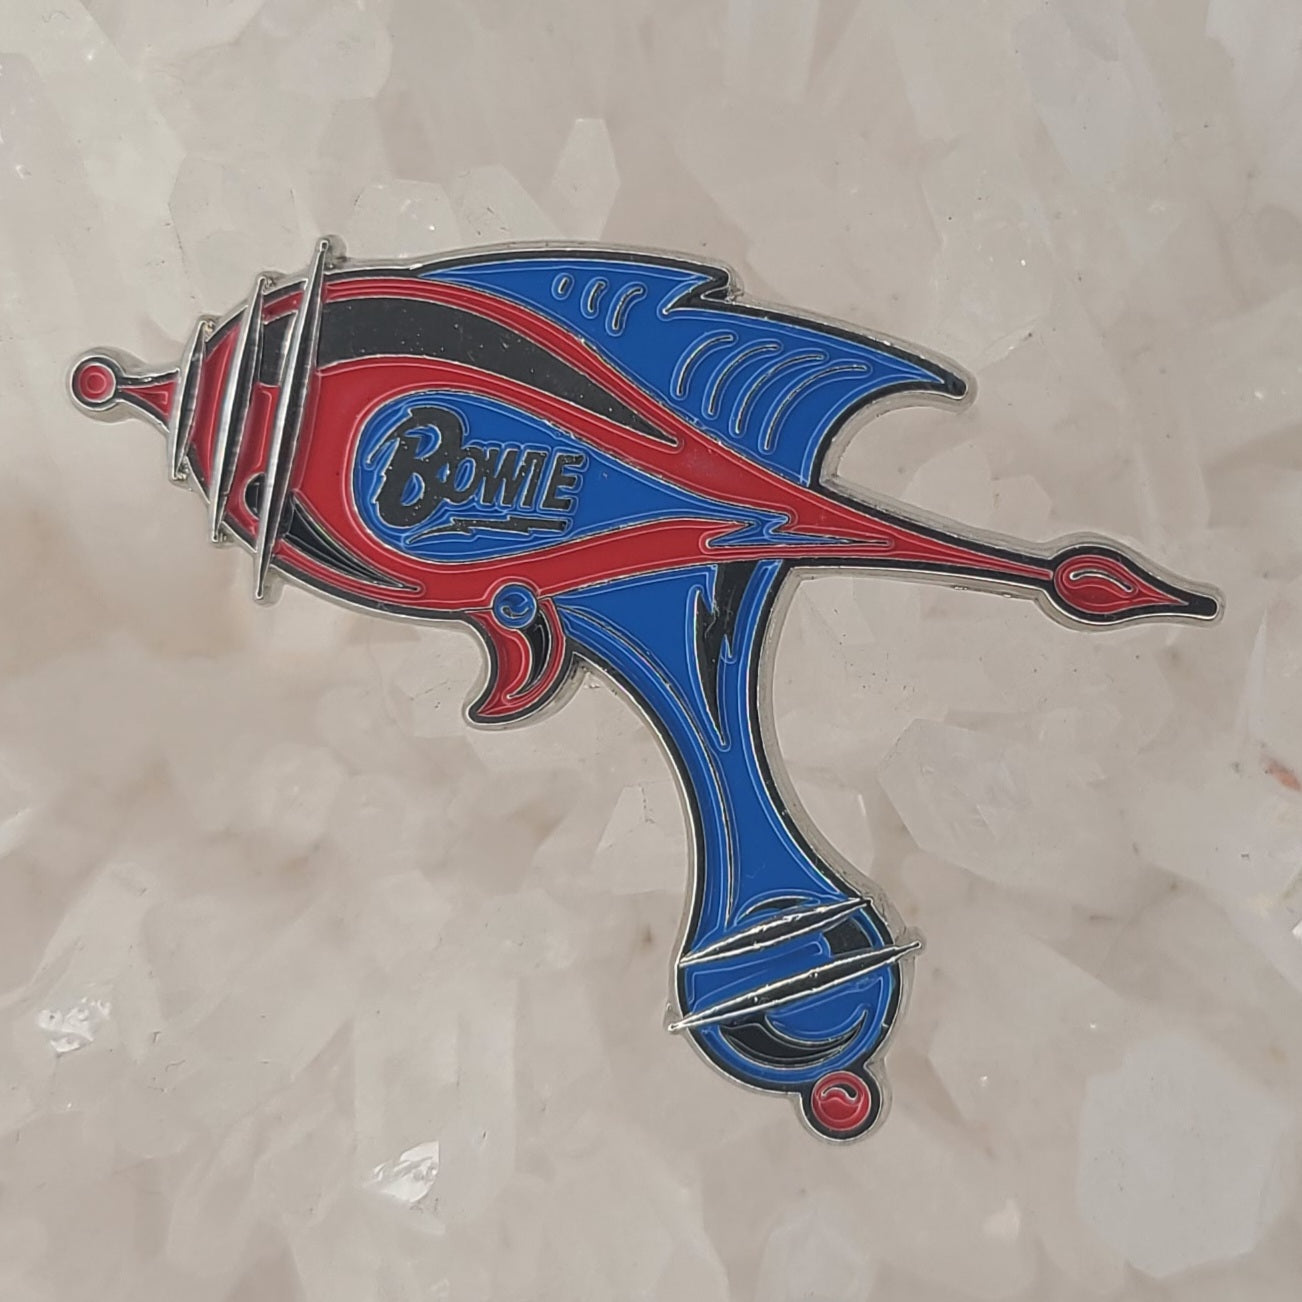 David Bowie Ray Gun Laser Rock Music Enamel Pins Hat Pins Lapel Pin Brooch Badge Festival Pinamel Hat Pin